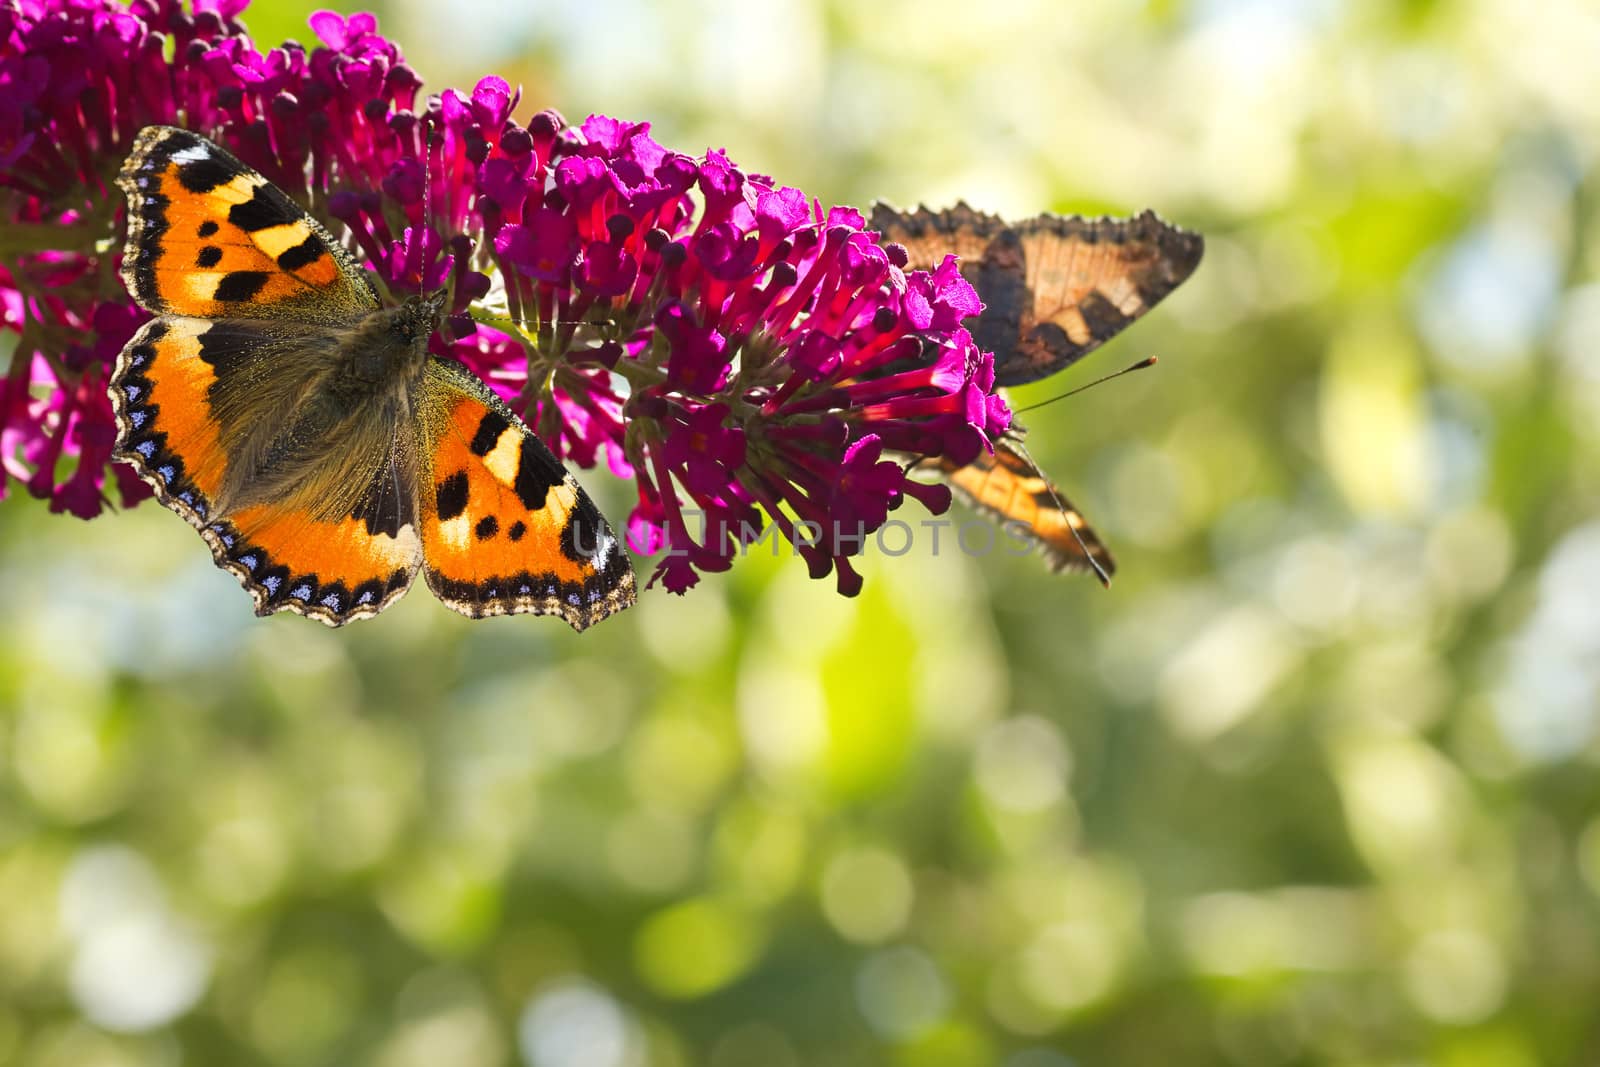 Small tottoiseshell butterflies on Butterfly bush by Colette